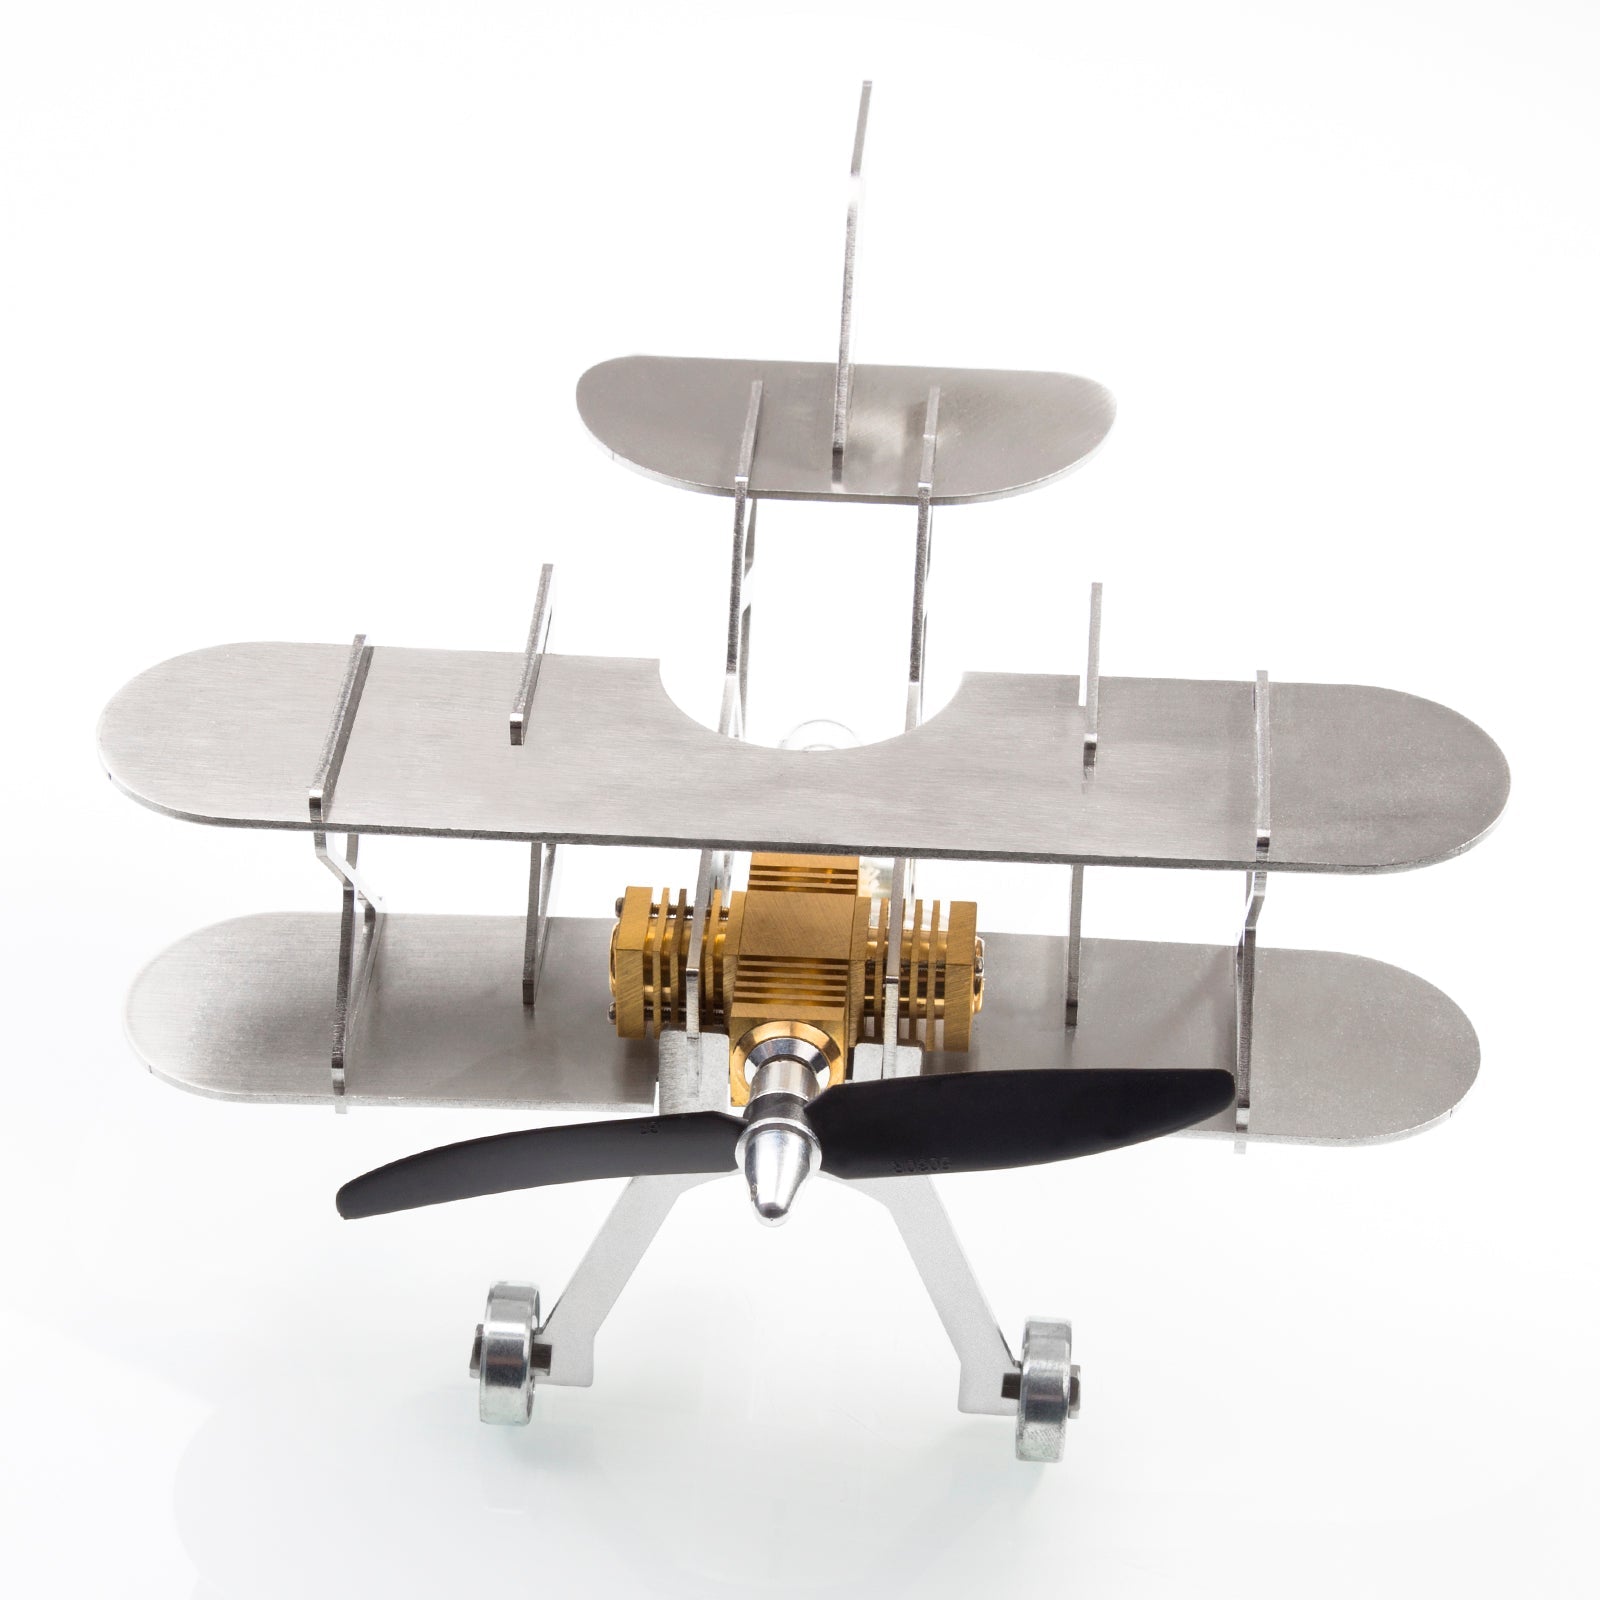 ENJOMOR Metal Stirling Airplane Model Set STEAM Science Education Toy Boutique Decoration enginediyshop